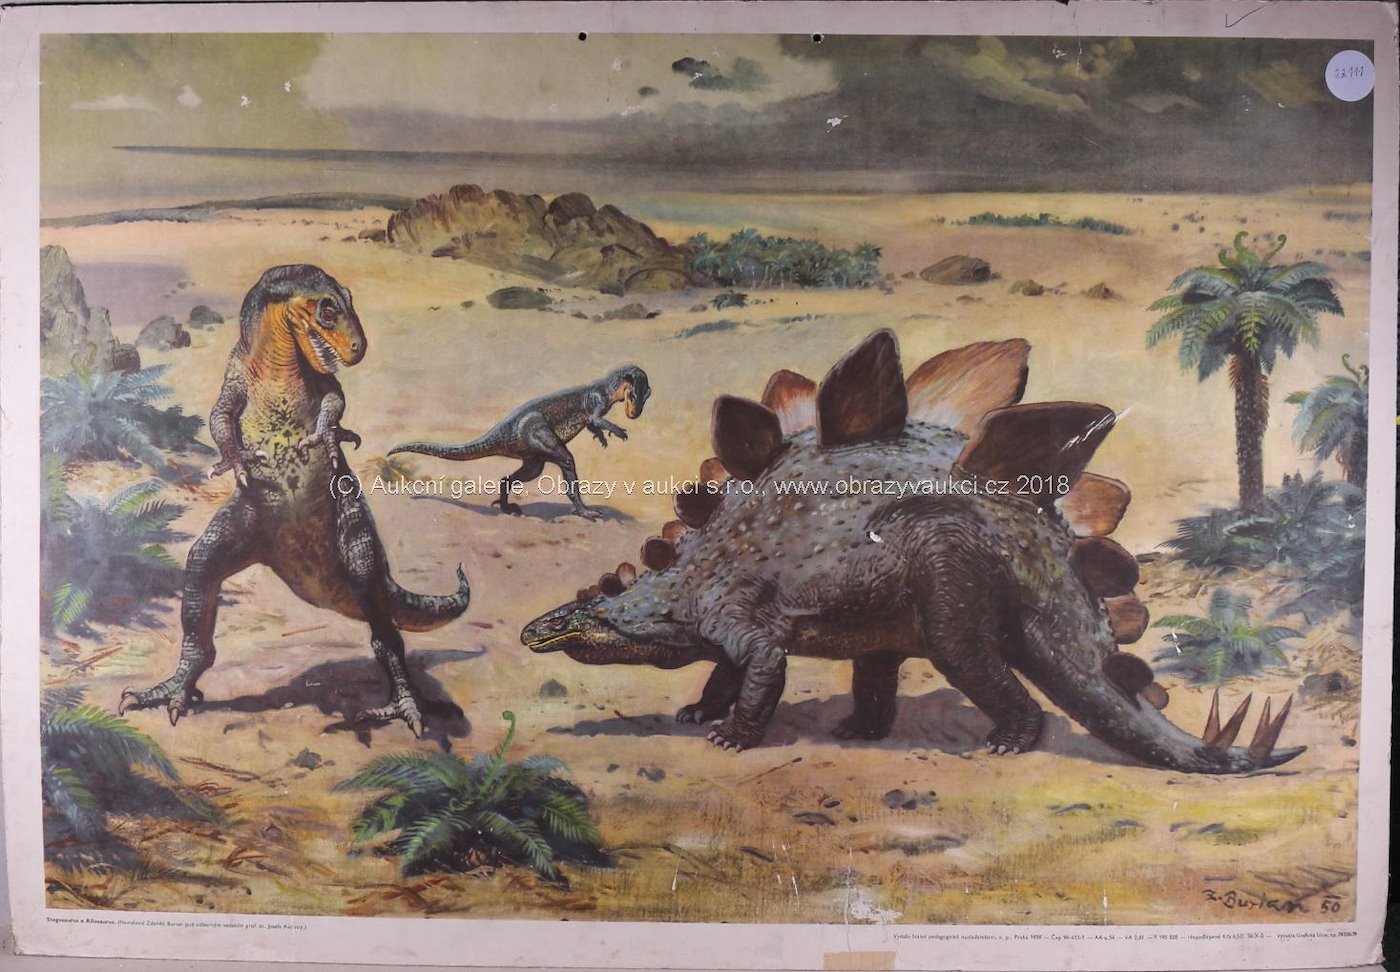 Zdeněk Burian - Školní plakát: Allosaurus a stegosaurus